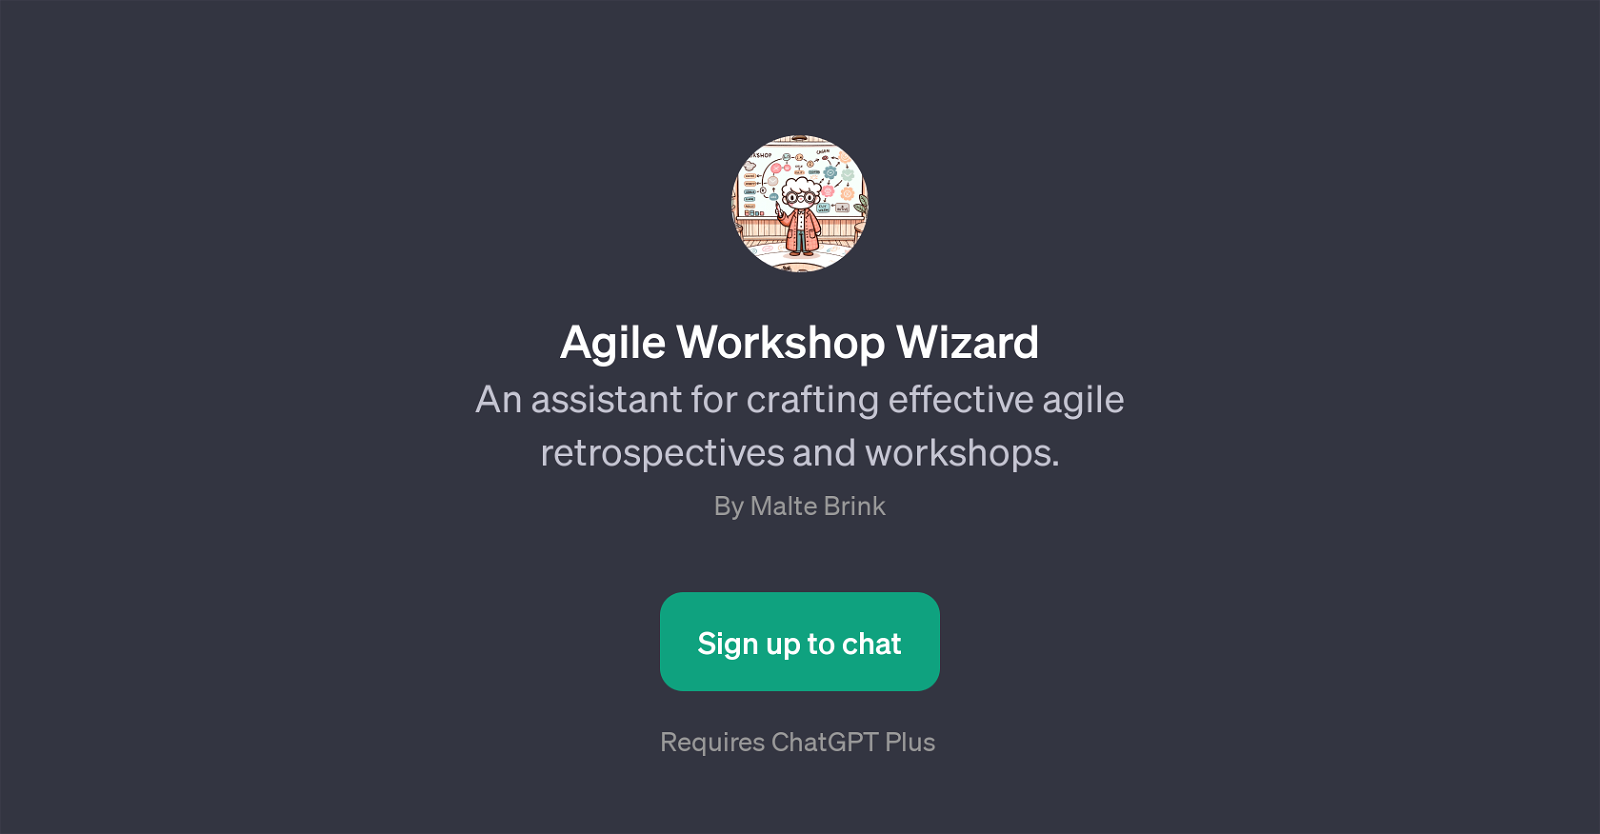 Agile Workshop Wizard website